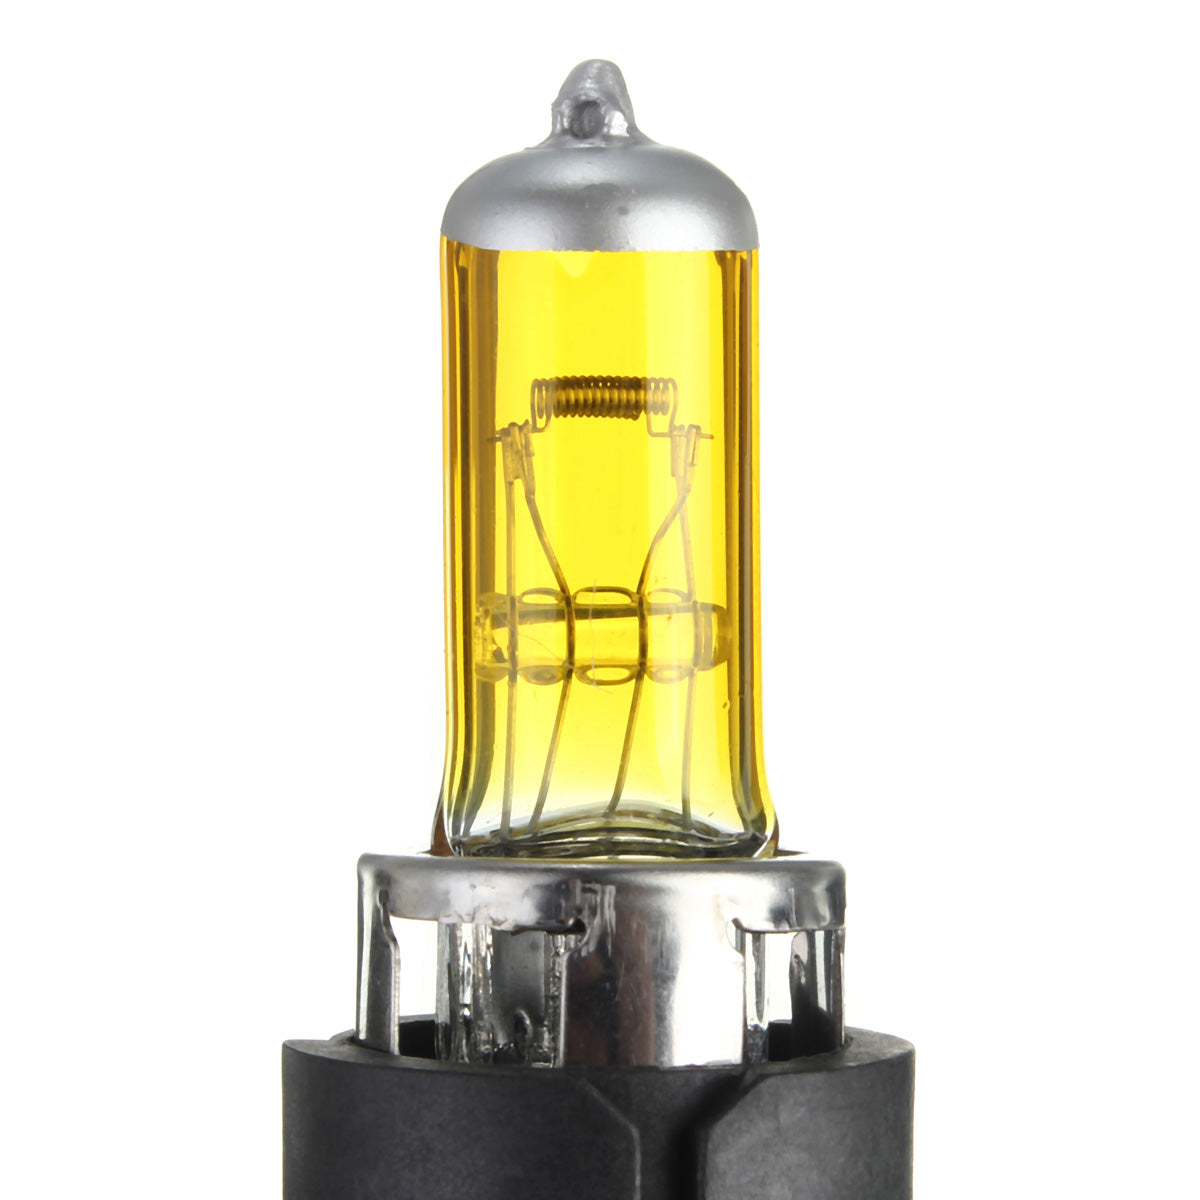 A Pair of 9004 HID Xenon Light Bulbs Lamps DC12V Yellow 3000K-3500K